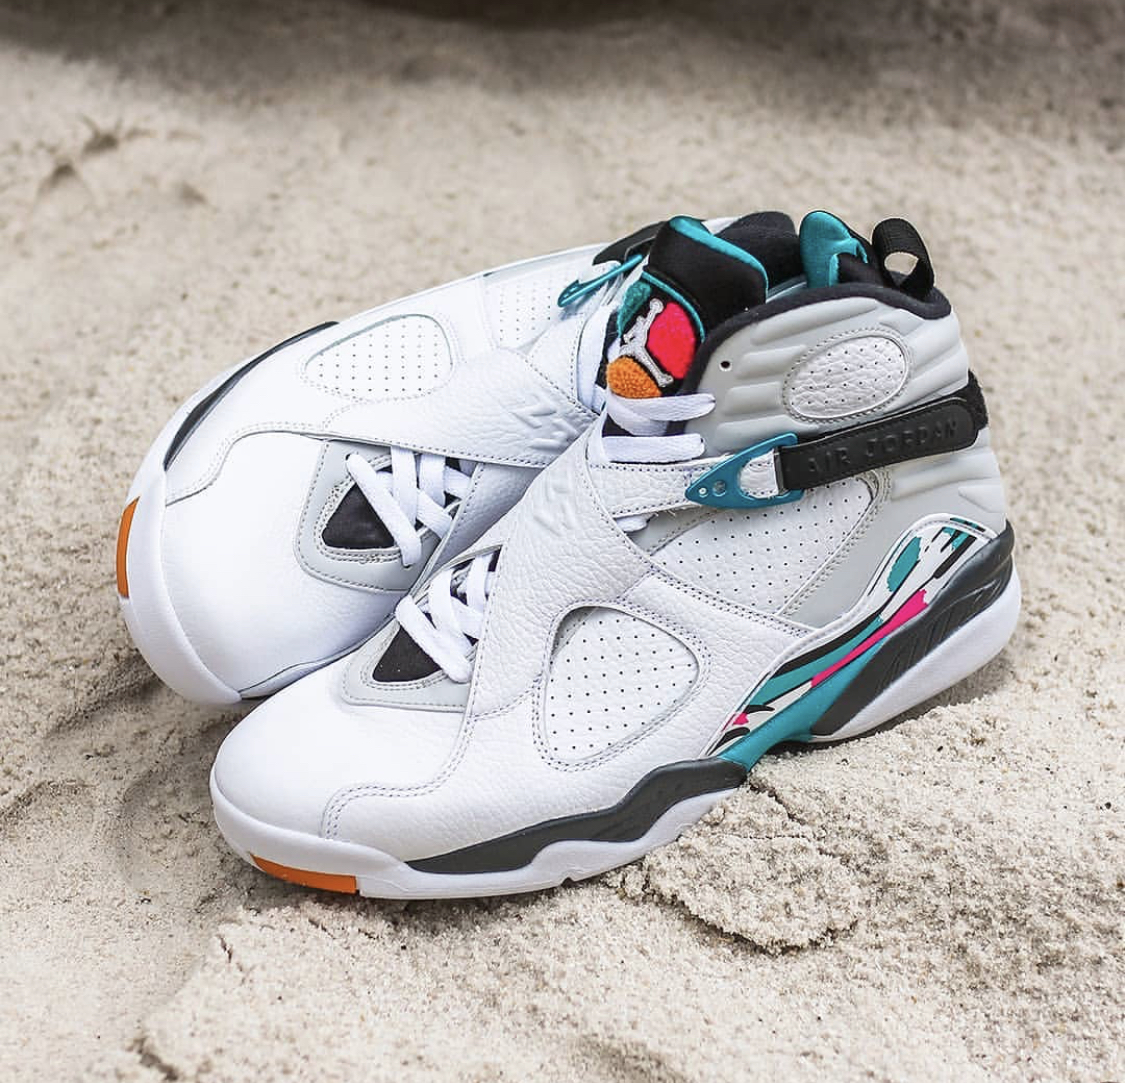 On Sale: Air Jordan 8 Retro "South Beach" — Sneaker Shouts